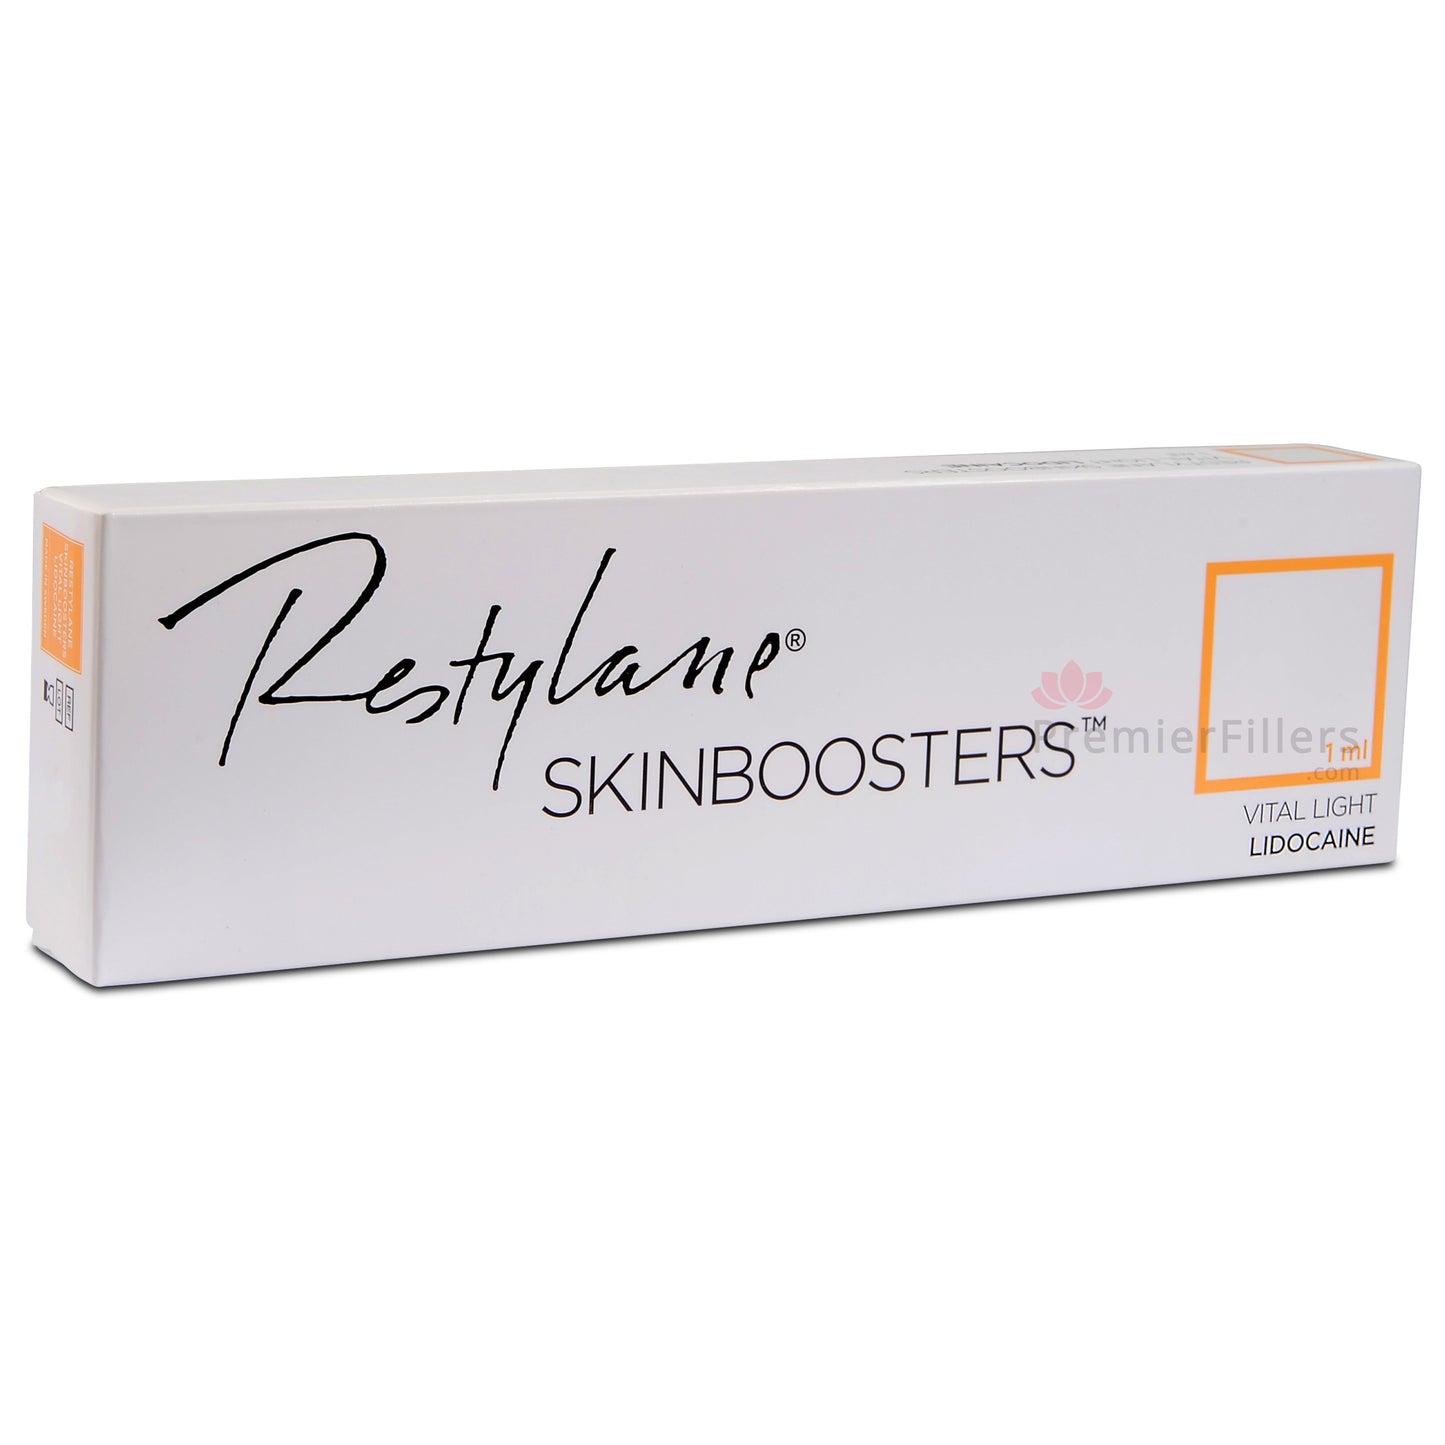 Restylane Skinboosters Vital Light Lidocaine (1x1ml)